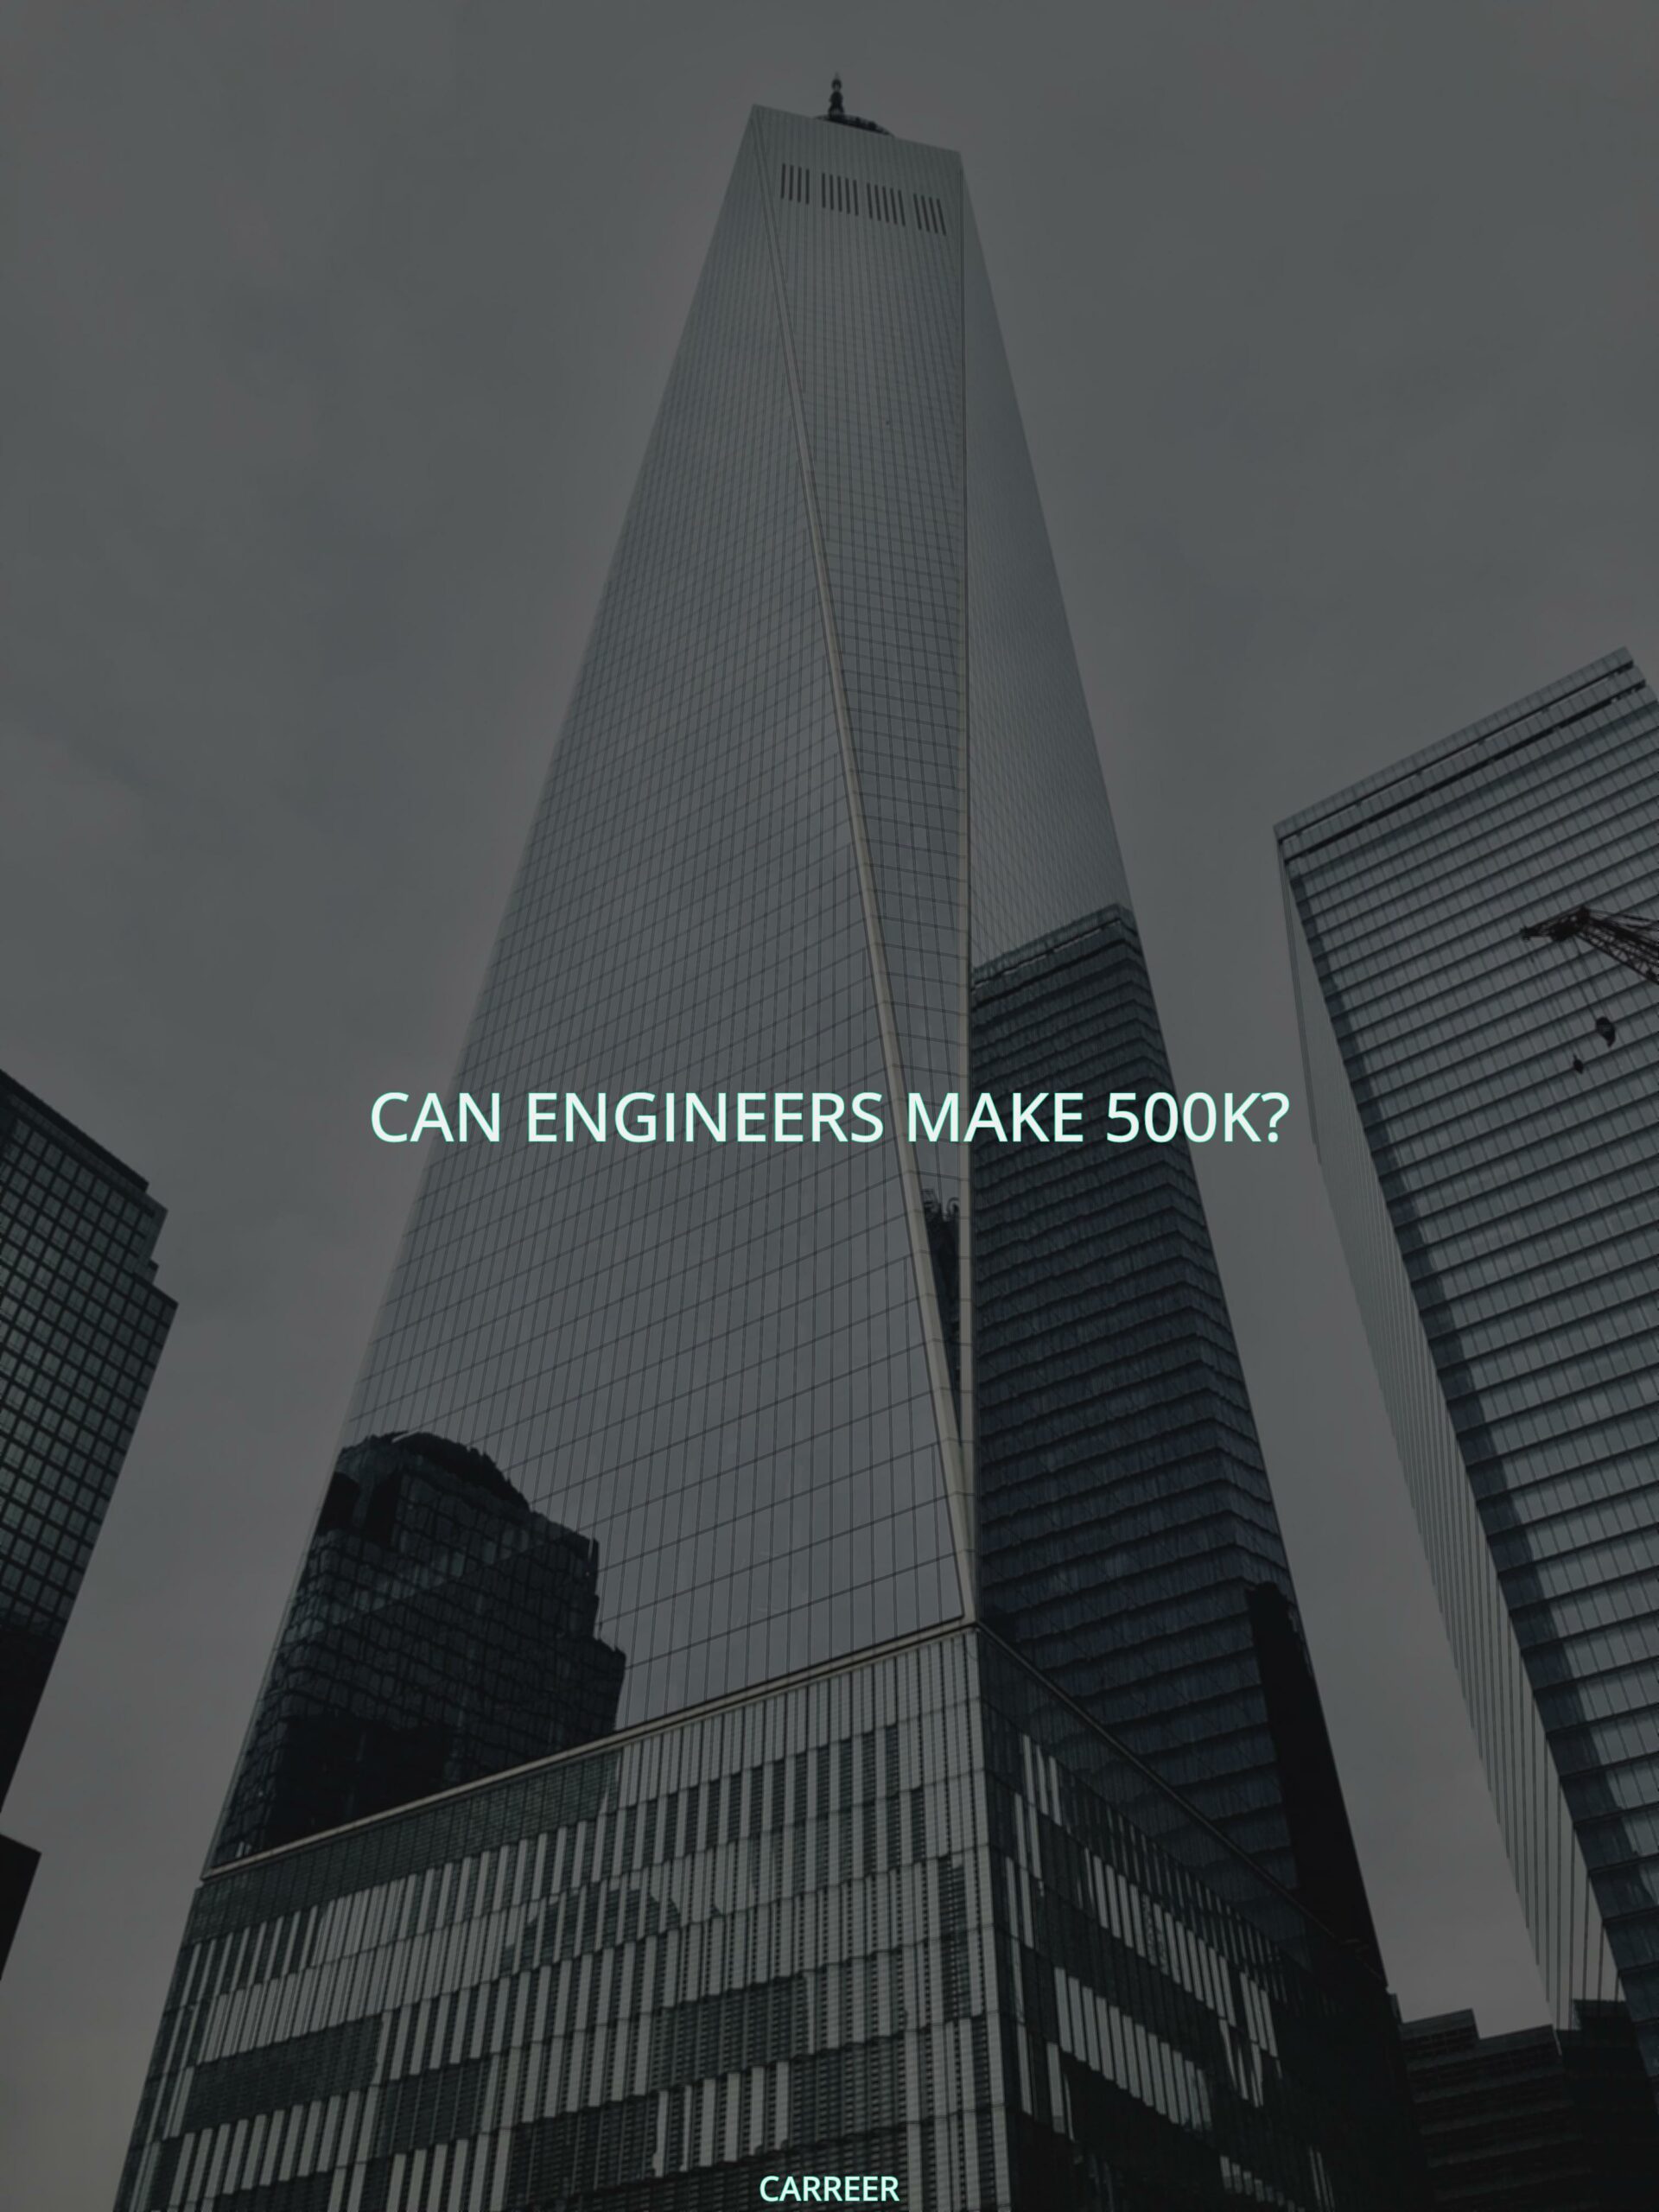 Can engineers make 500k?